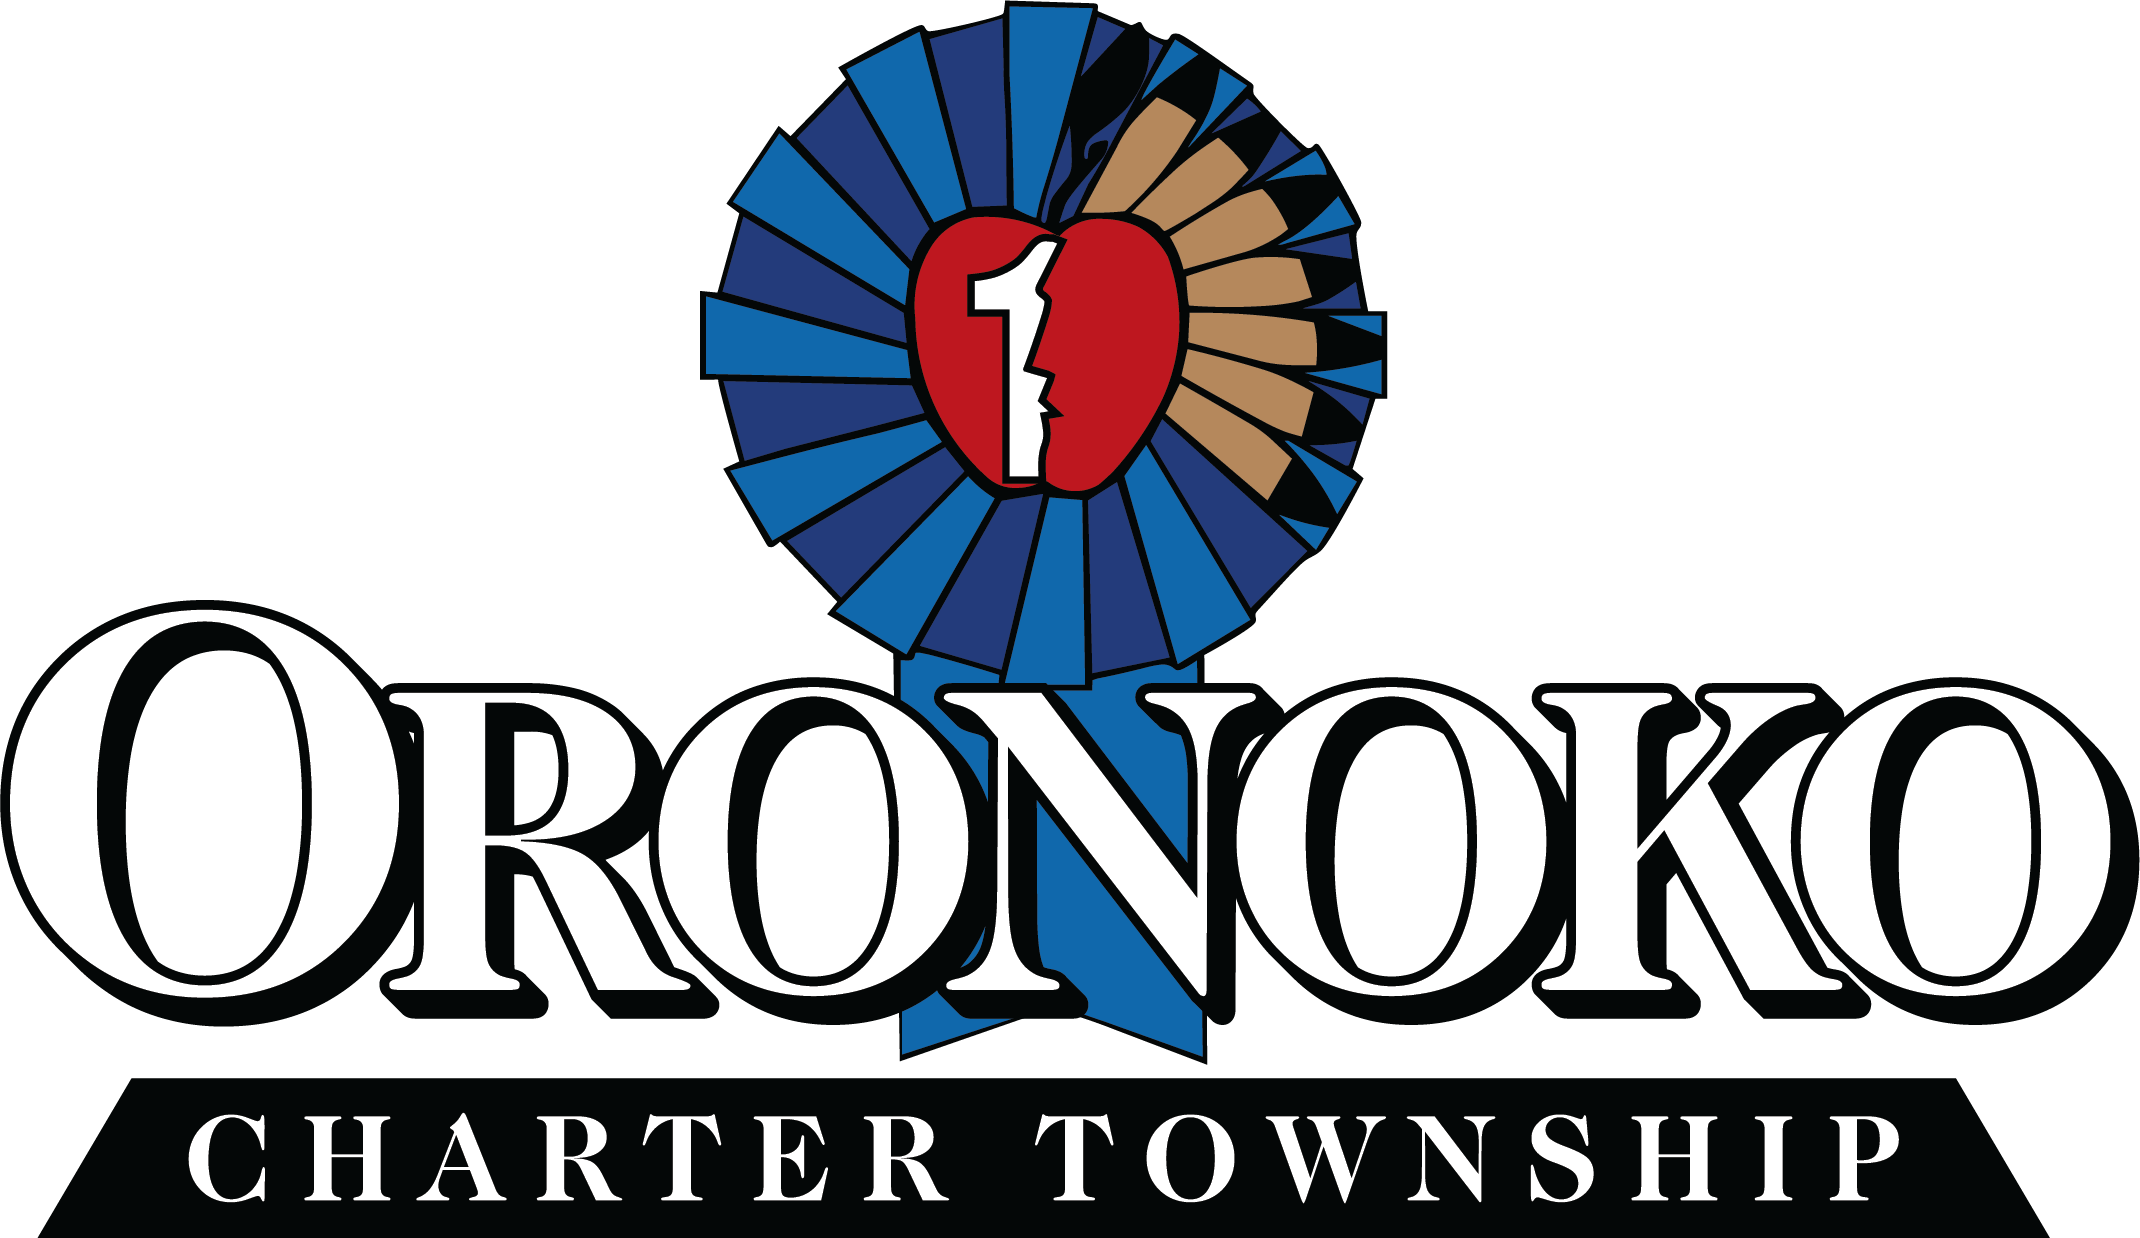 Oronoko Charter Township